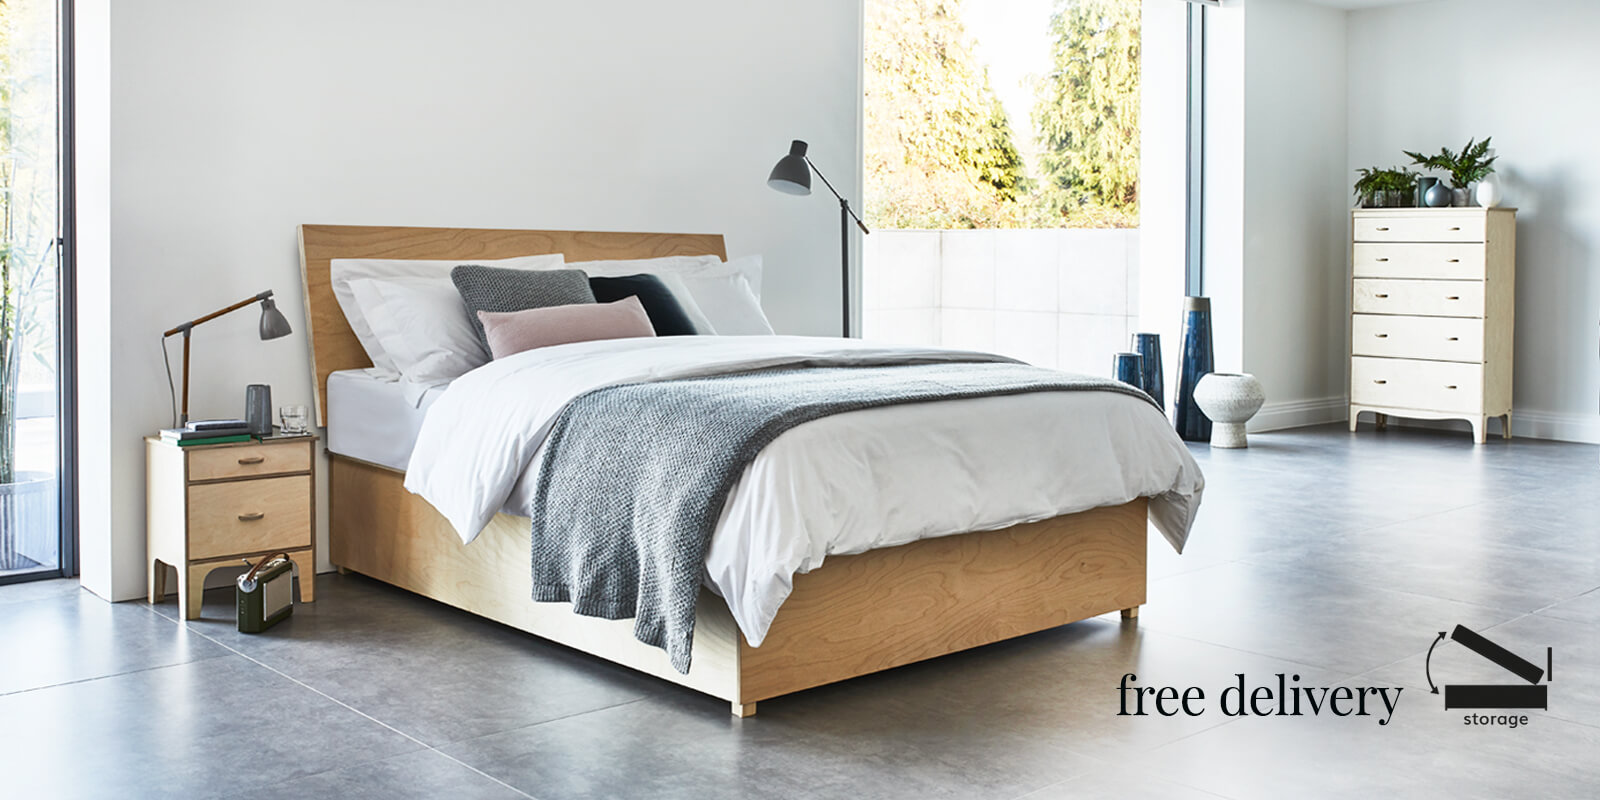 warren evans tuscany mattress reviews